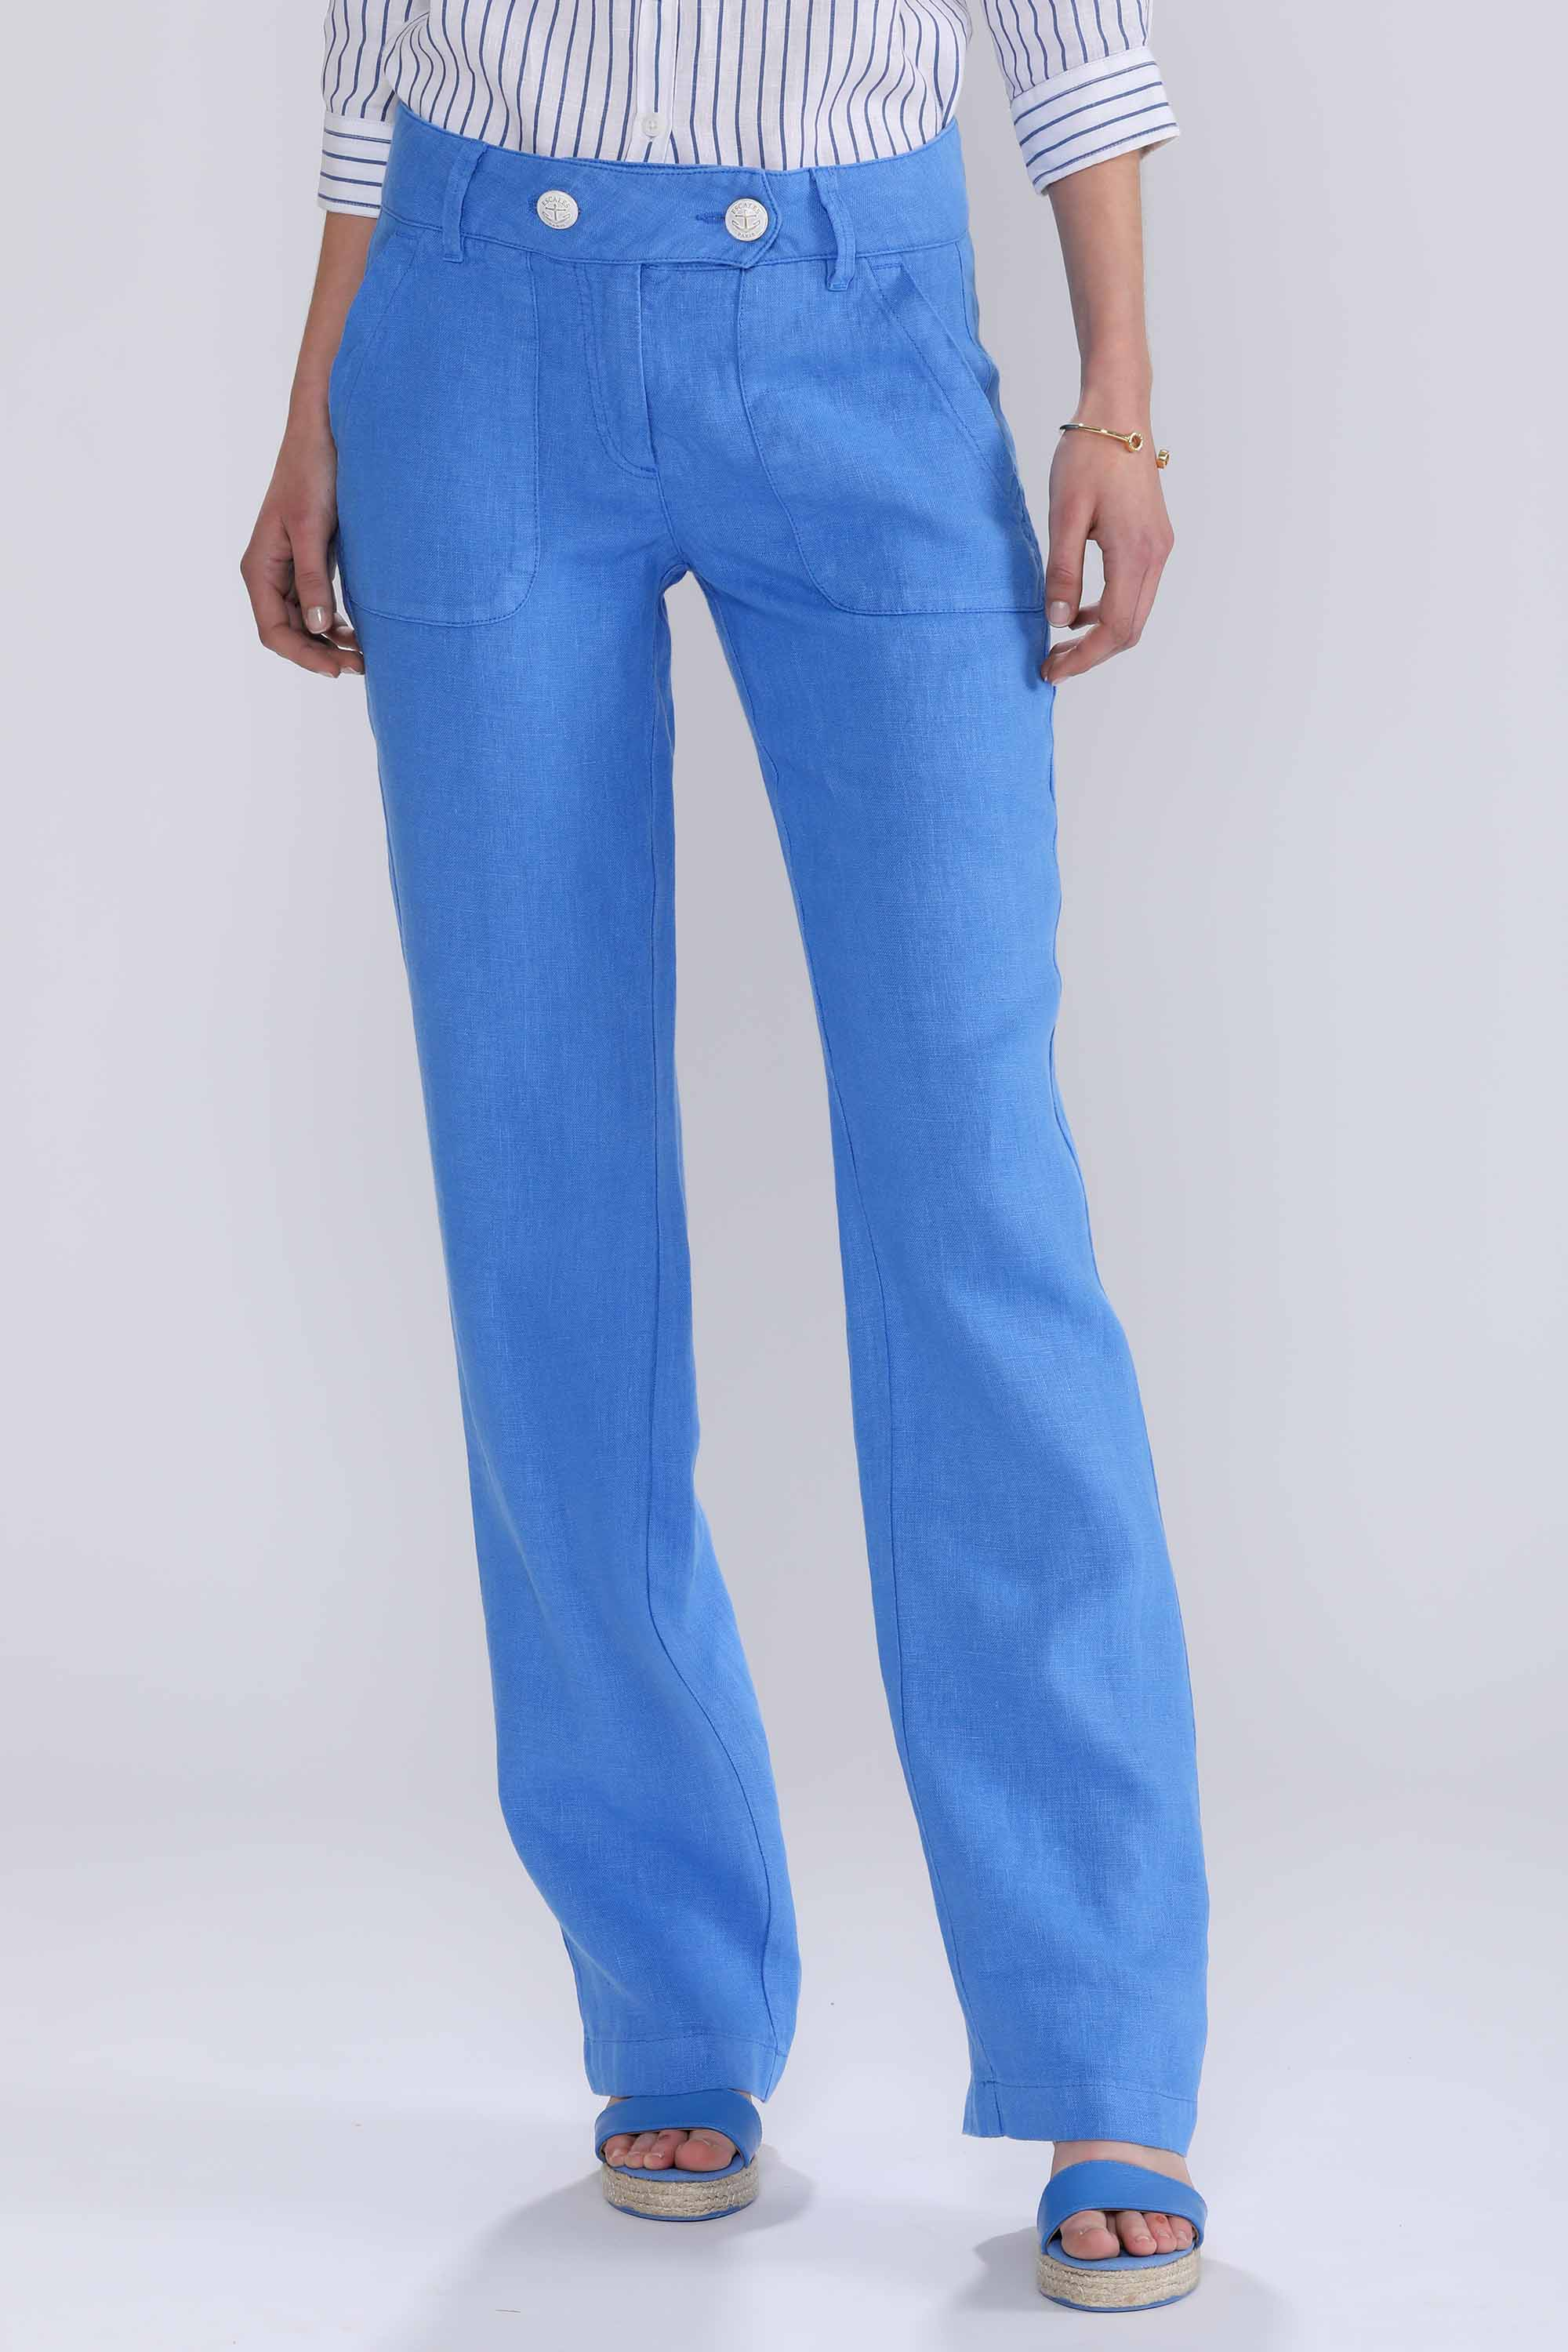 Blue Linen Pants for Women - Pants for Women